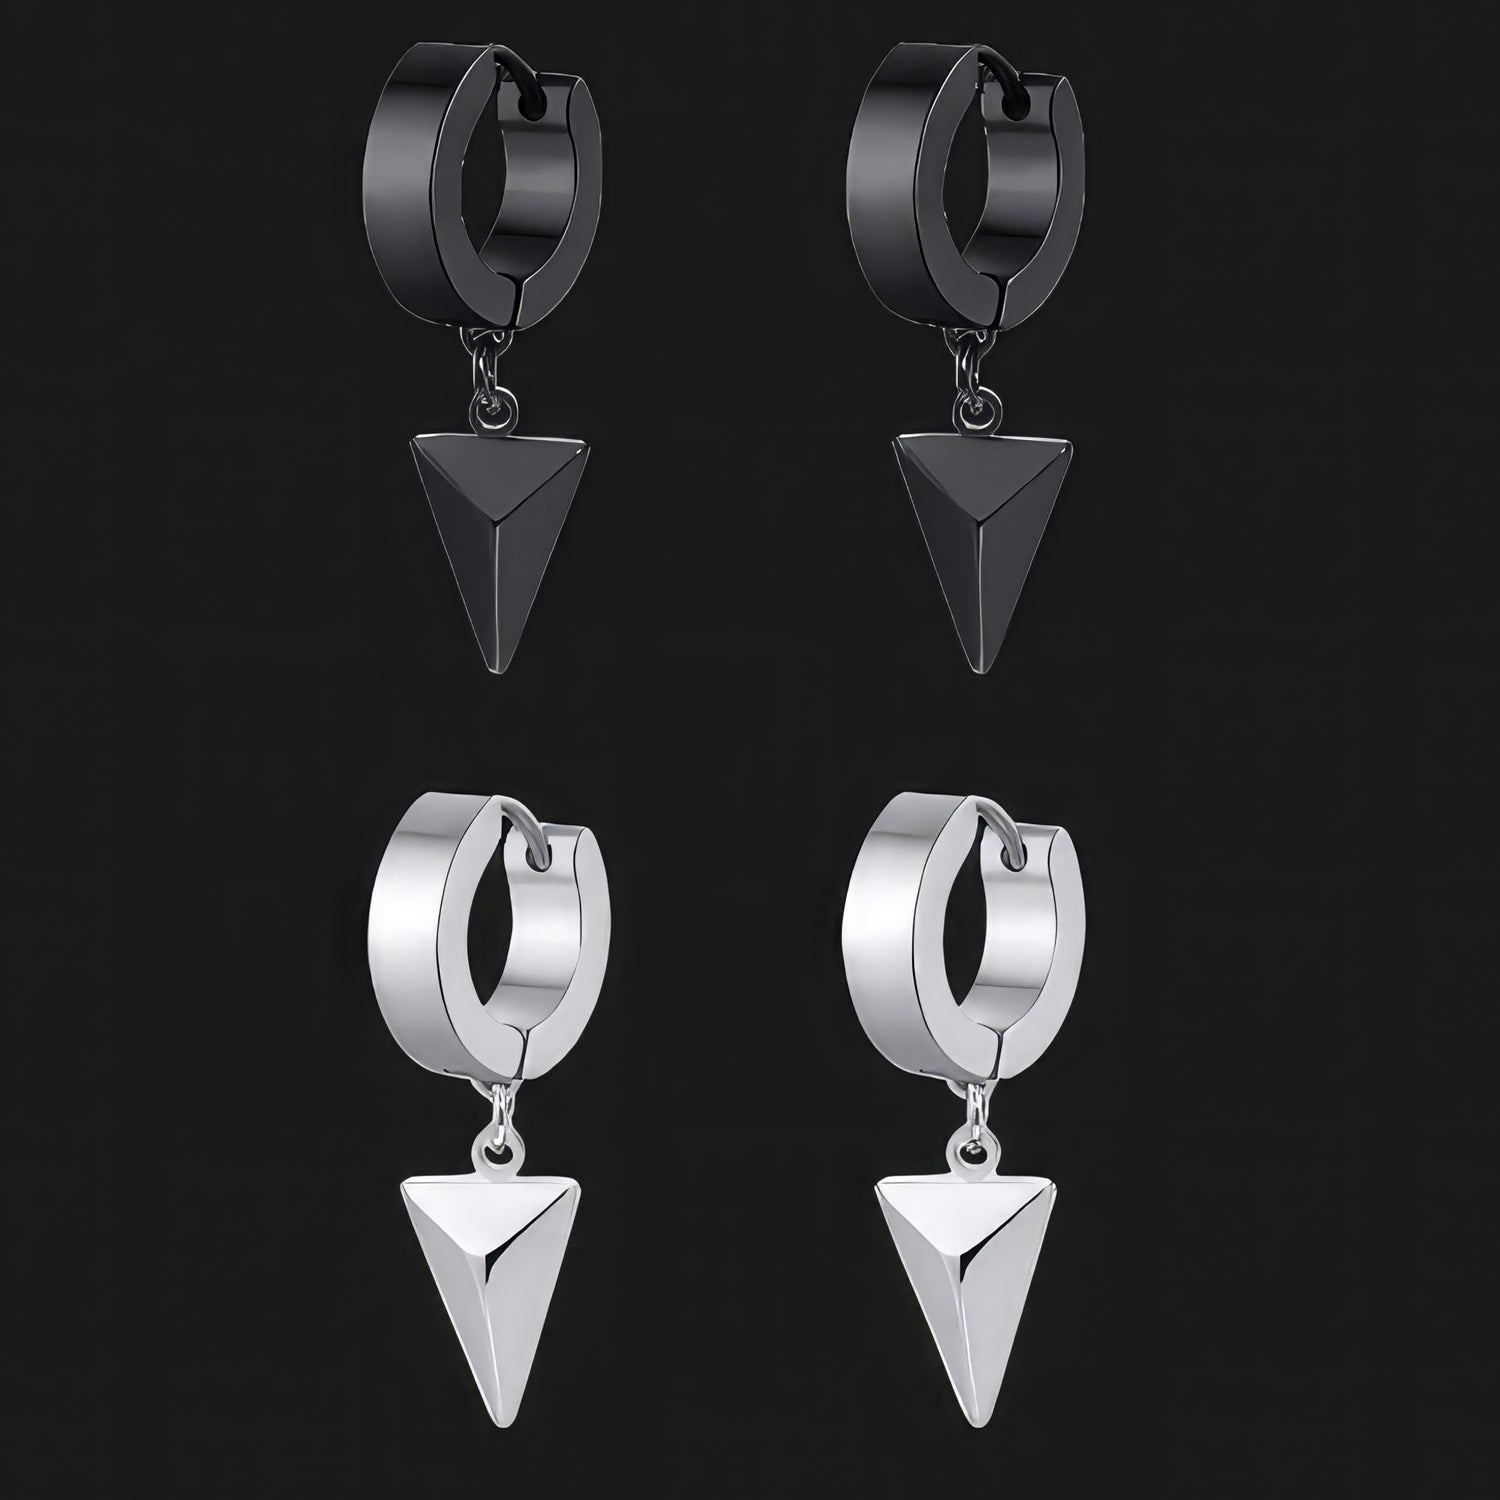 Both Pairs Triangular Cone Earrings